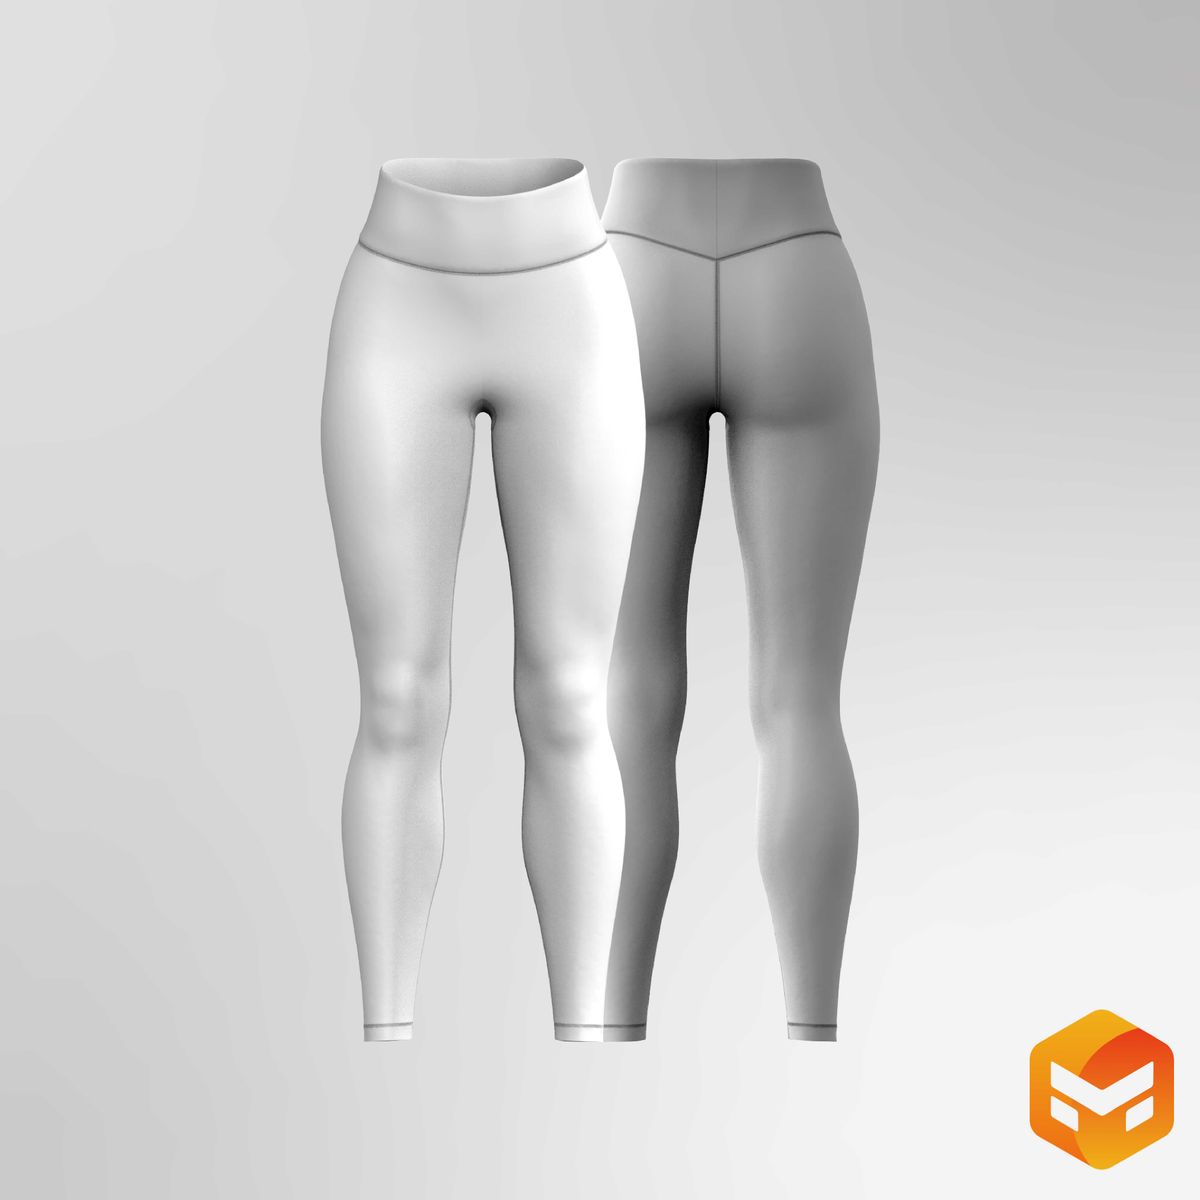 https://www.fittdesign.com/uploads/product/ladies-v-shaped-waistband-leggings-3d-garment/a457f51f-5641-416b-916c-f931d05d4796-mod=w=1200,h=1200.jpg